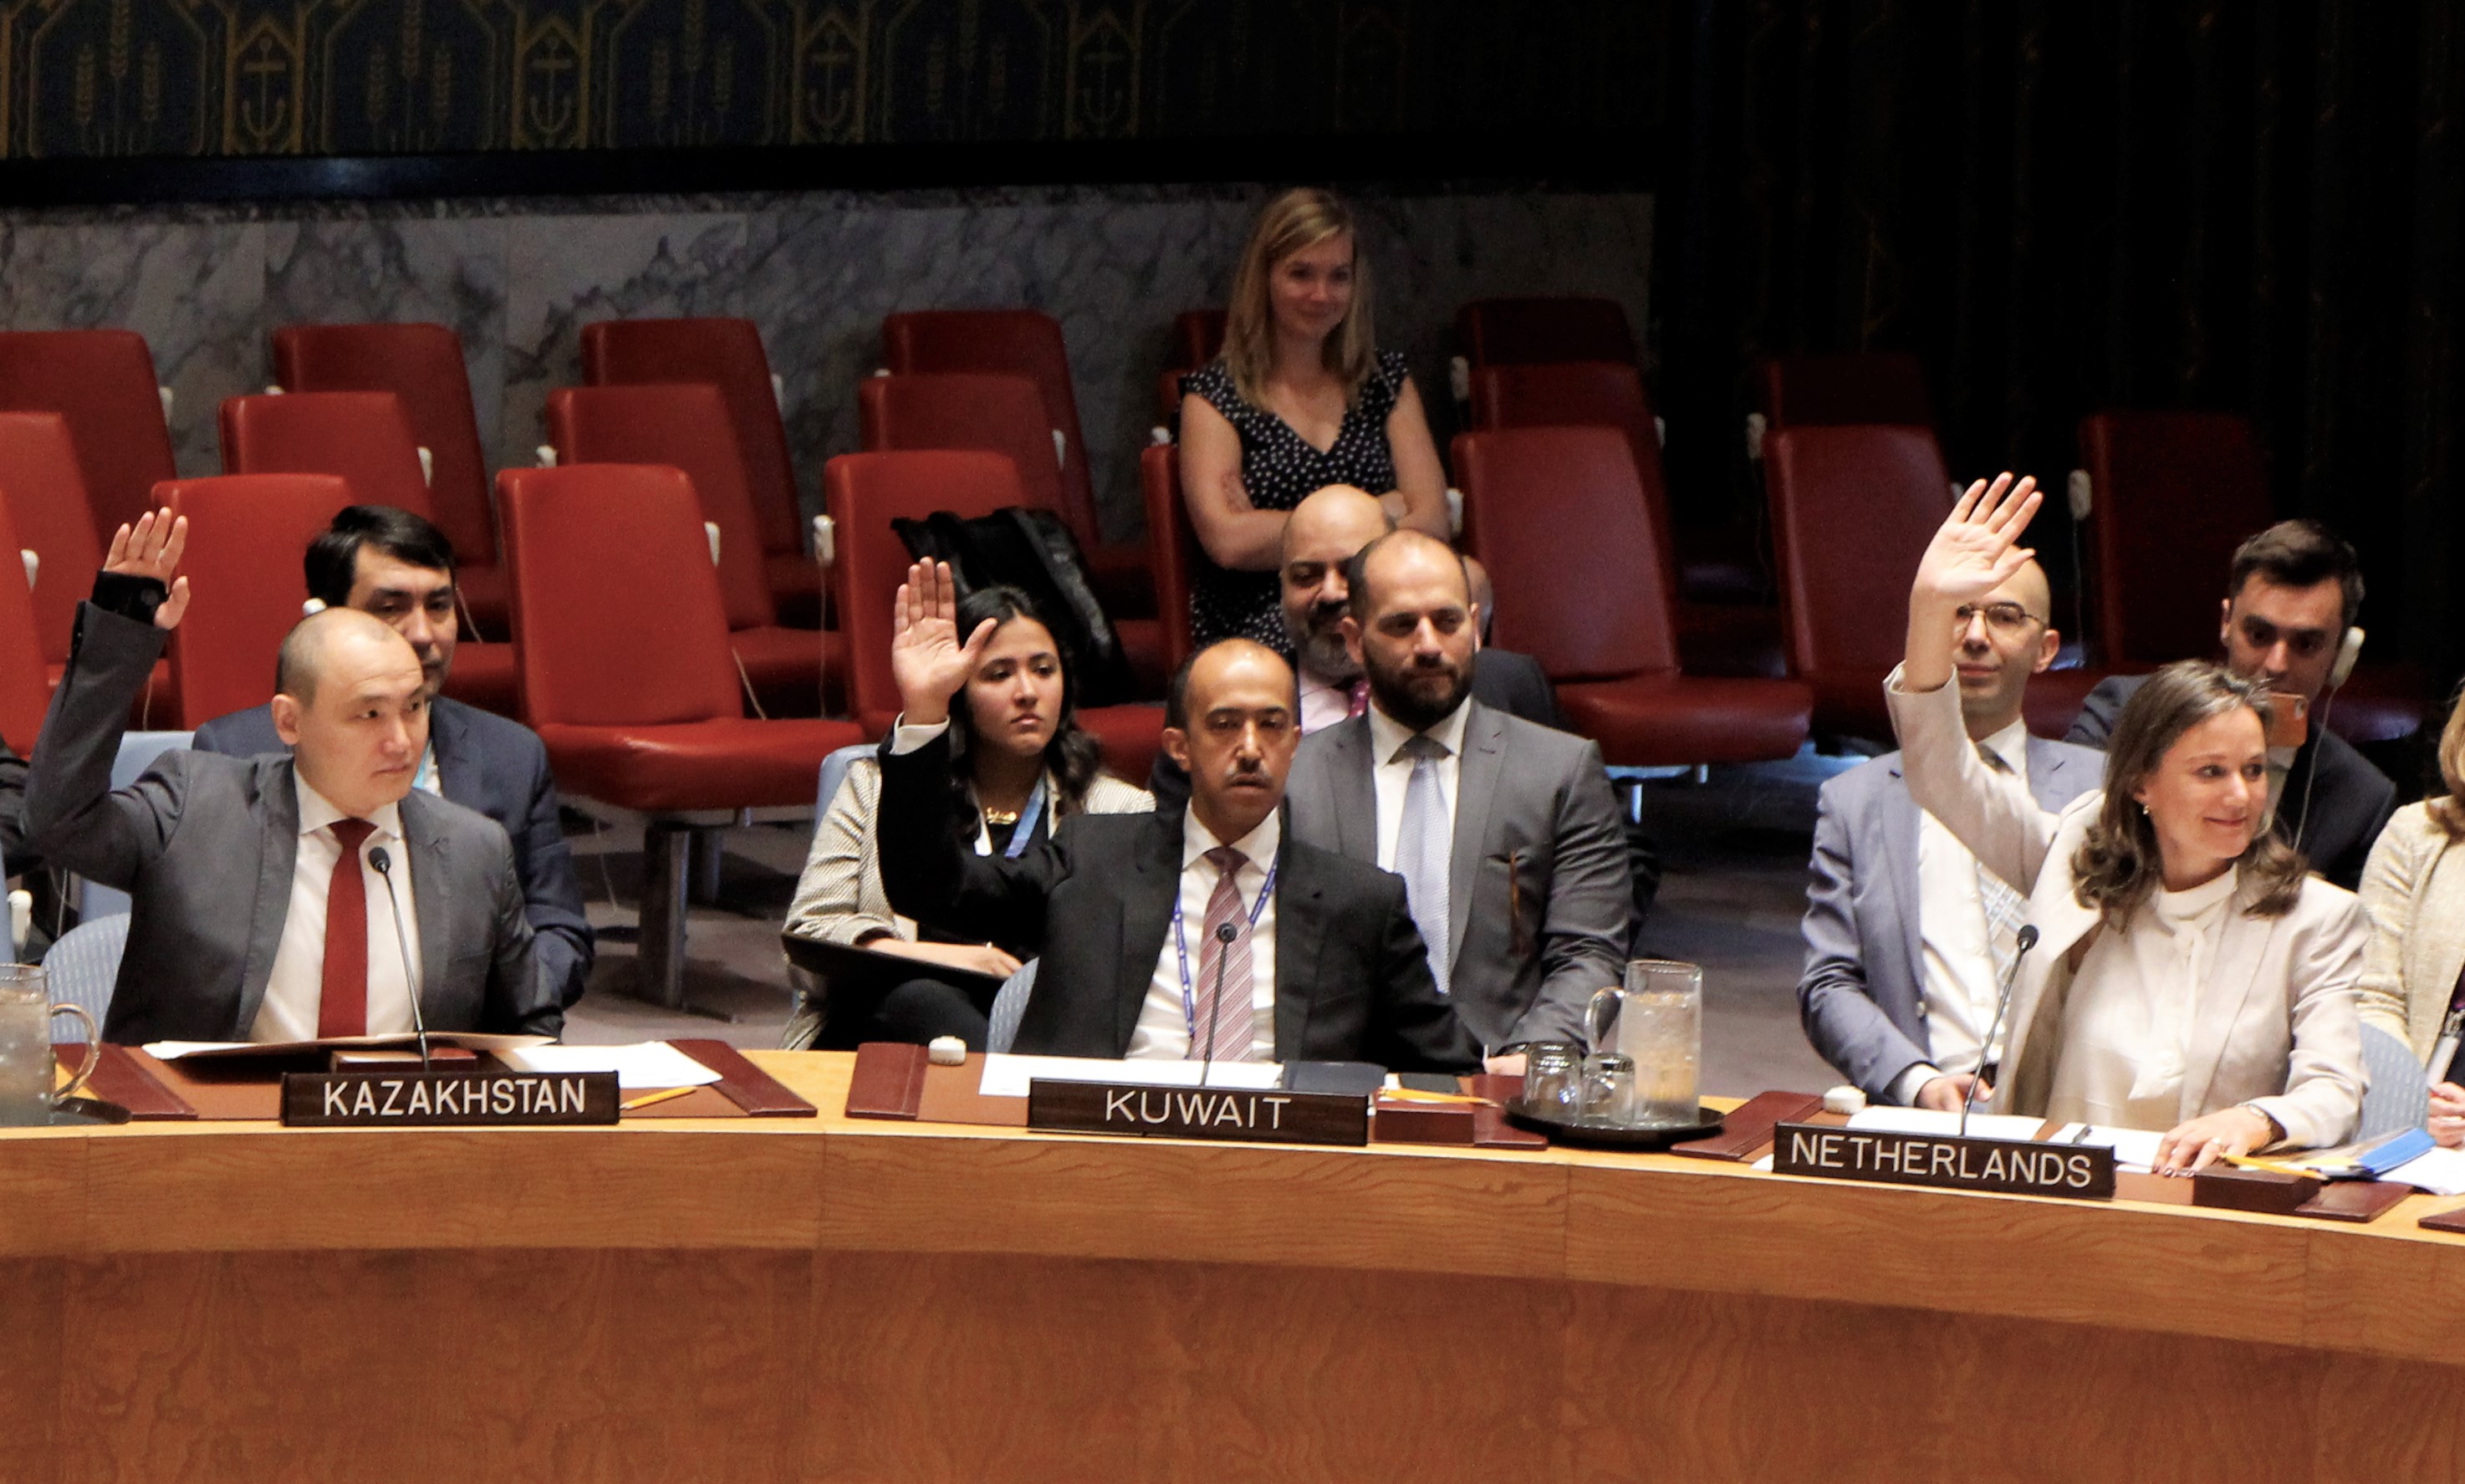 UN Security Council resolution condemns starving of civilians